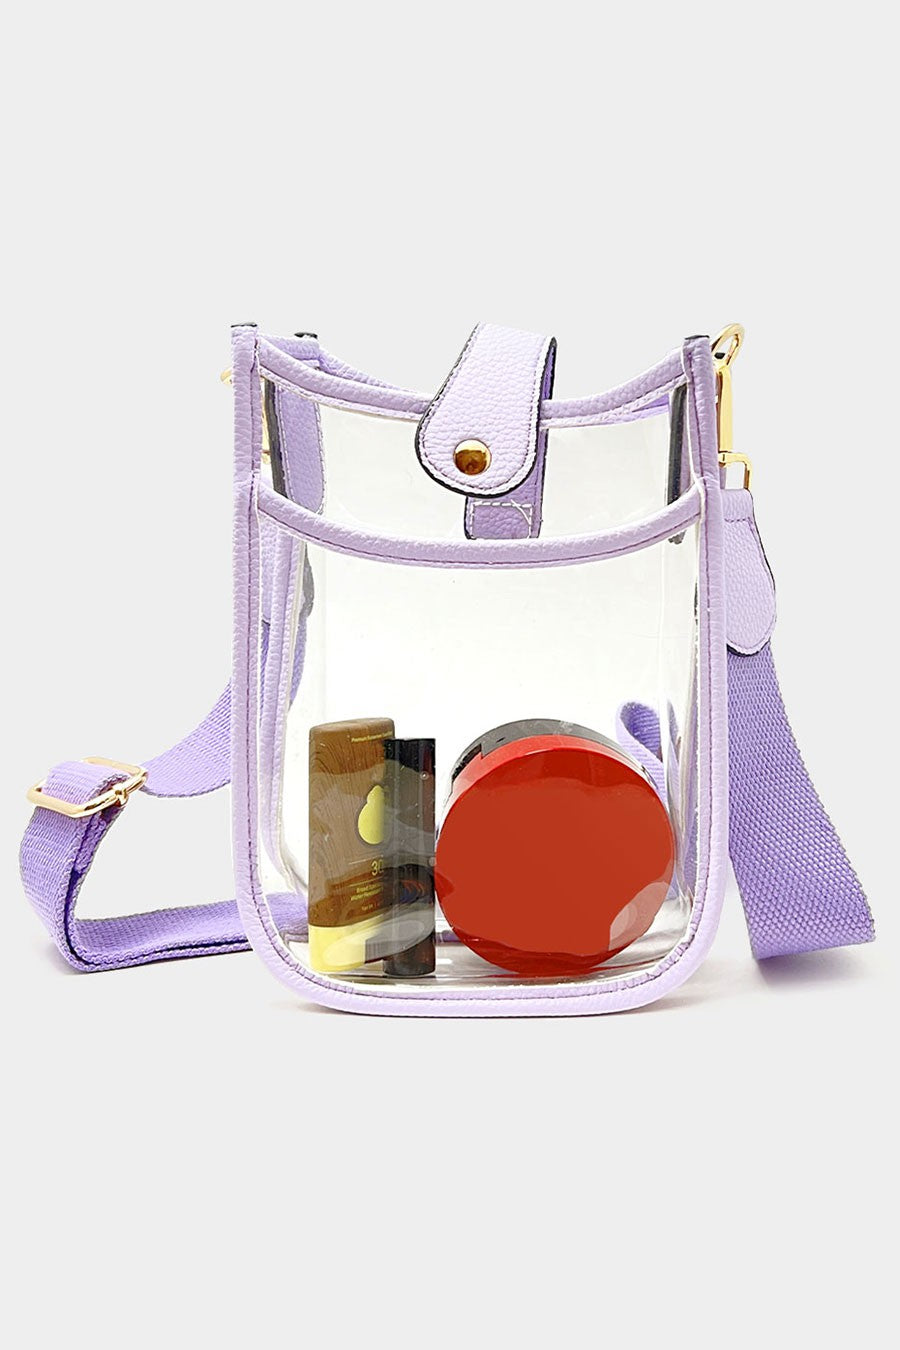 Bags & – Accessories Decor Linens LD & Small